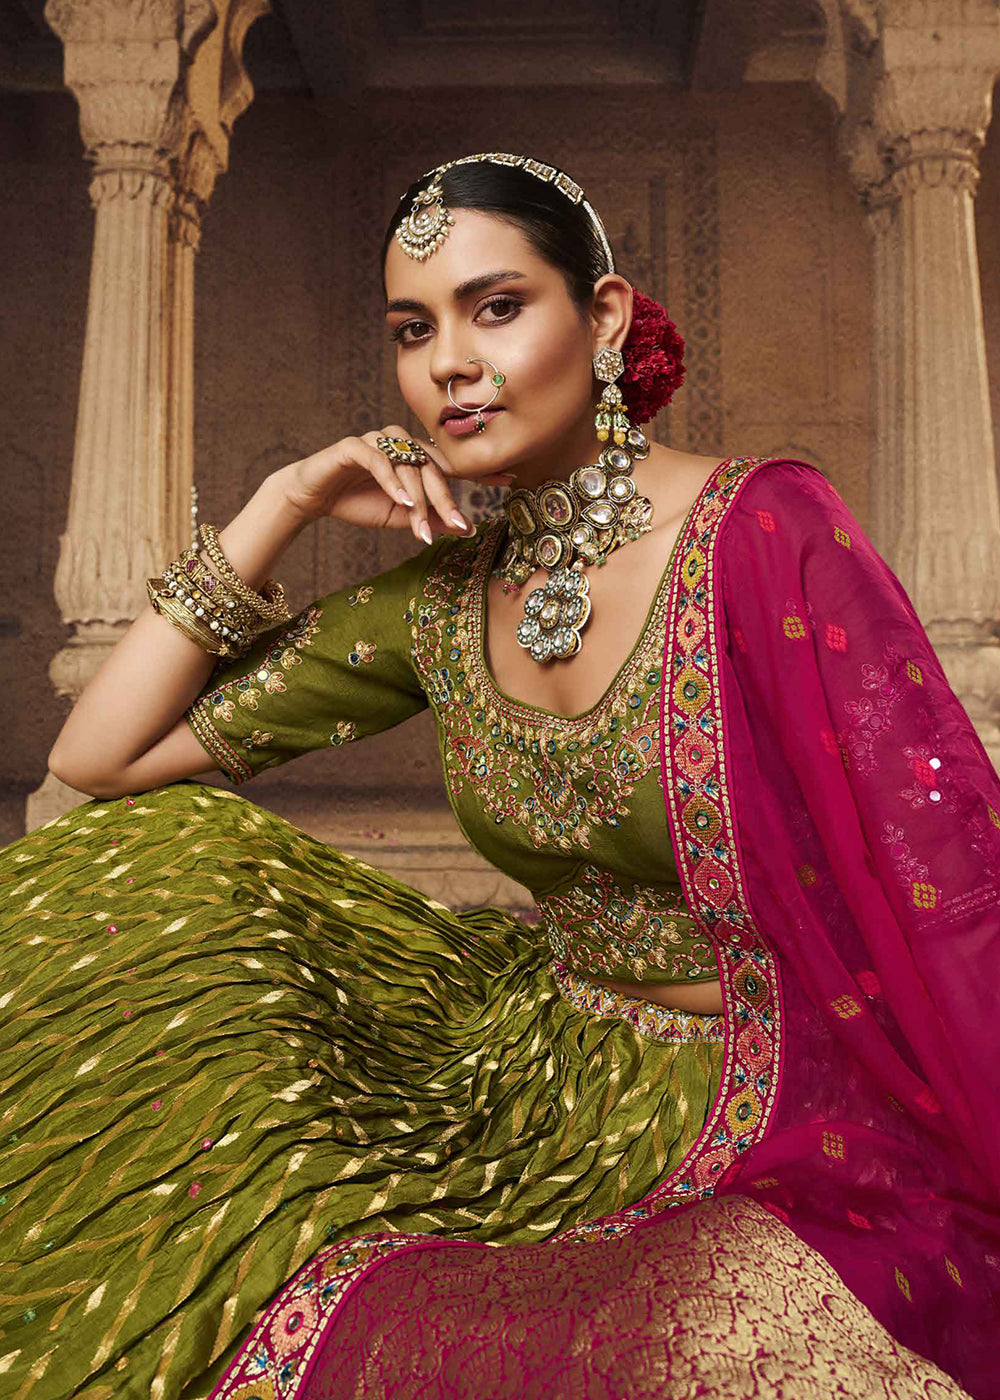 Buy Now Heavy Viscose Mehndi Green Embroidered Bridal Lehenga Choli Online in USA, UK, Canada & Worldwide at Empress Clothing.